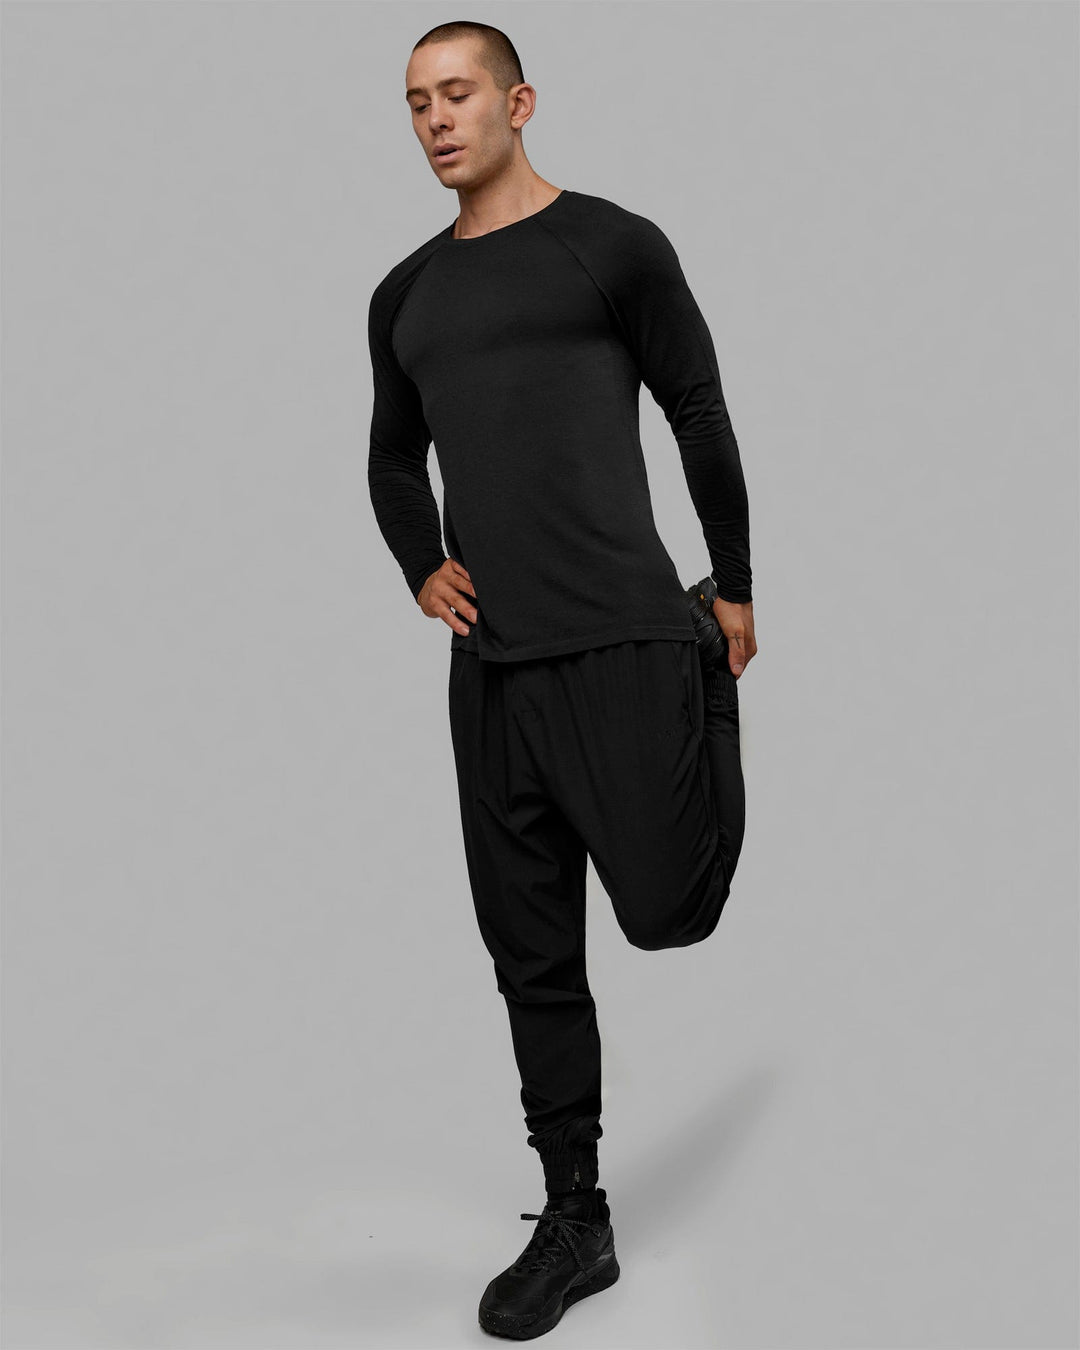 Man wearing AeroFLX+ Seamless Long Sleeve Tee - Black Marl